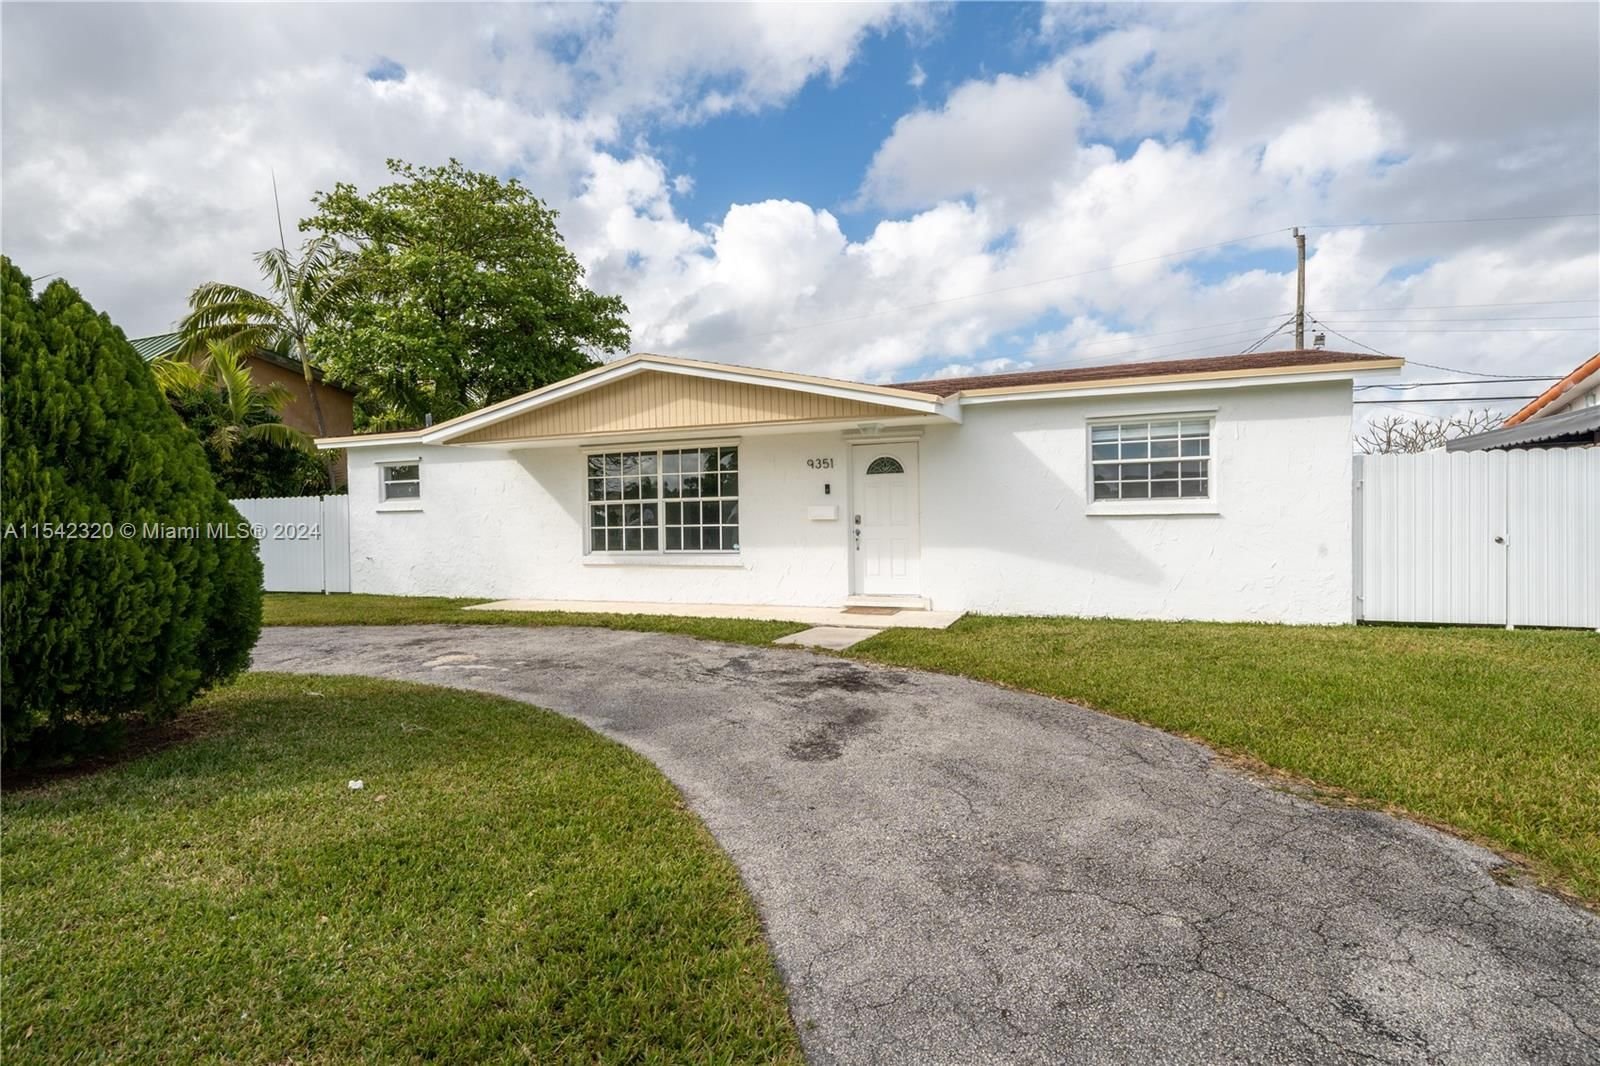 Real estate property located at 9351 27th St, Miami-Dade County, CORAL GARDENS, Miami, FL